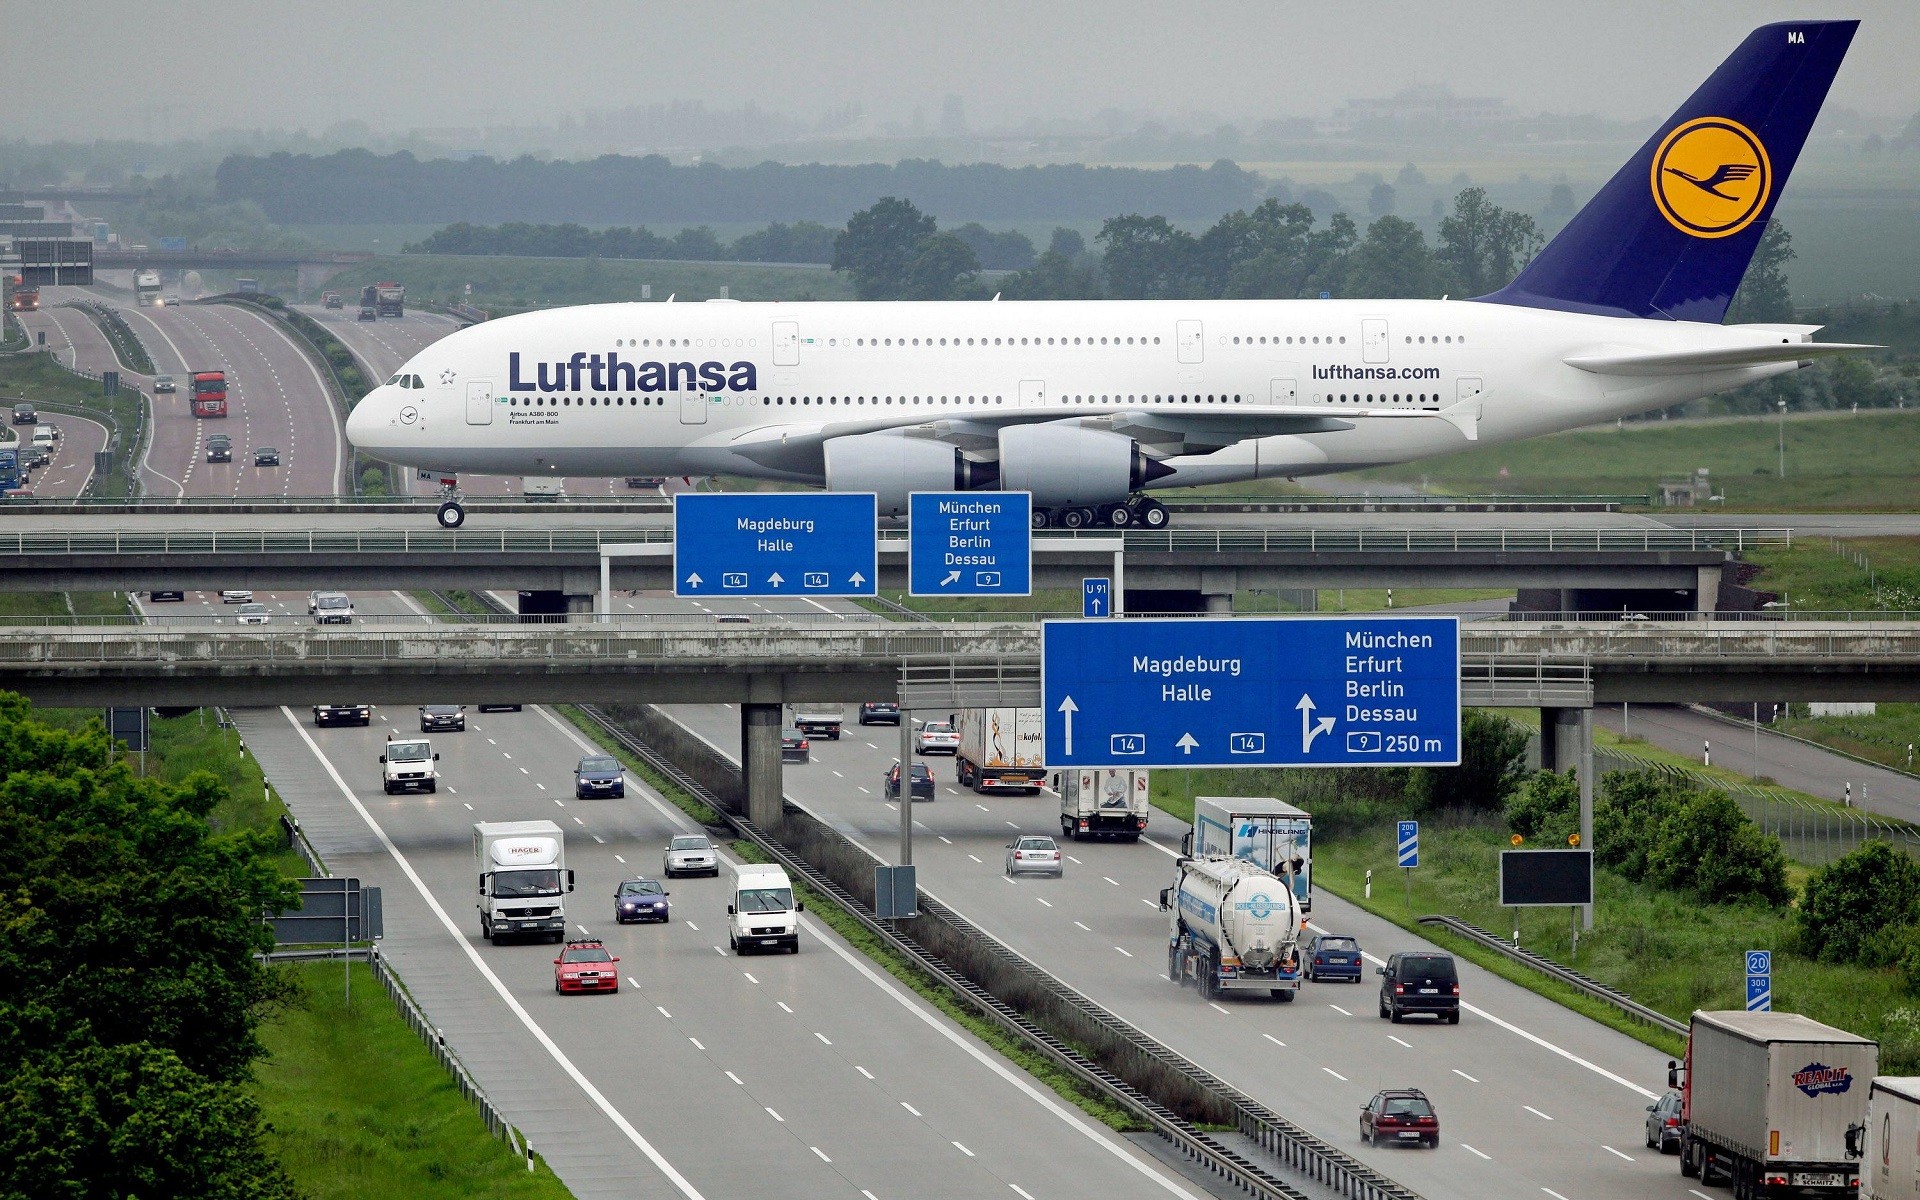 aircraft, Passenger Aircraft, Lufthansa, Airbus, A380, Road, Car, Germany, Leipzig Airport Wallpaper